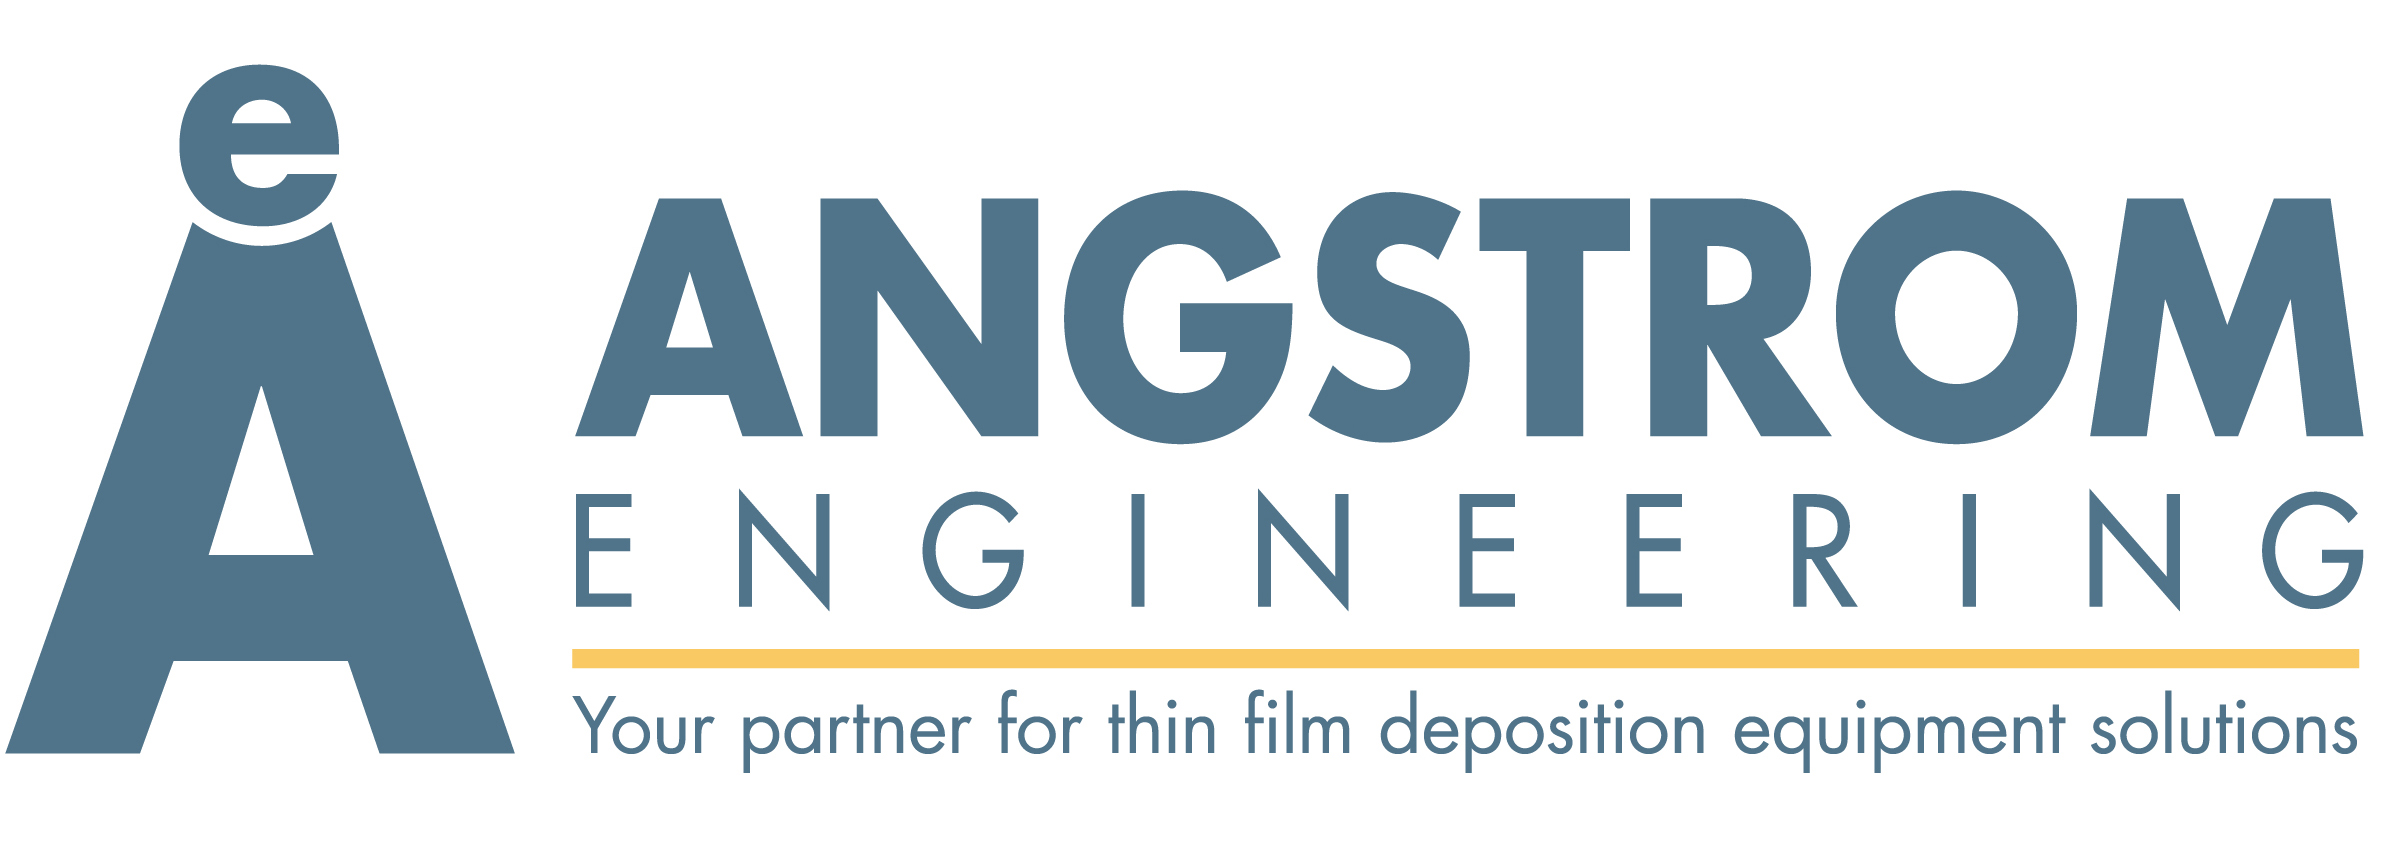 Angstrom Engineering logo, links to Angstrom website